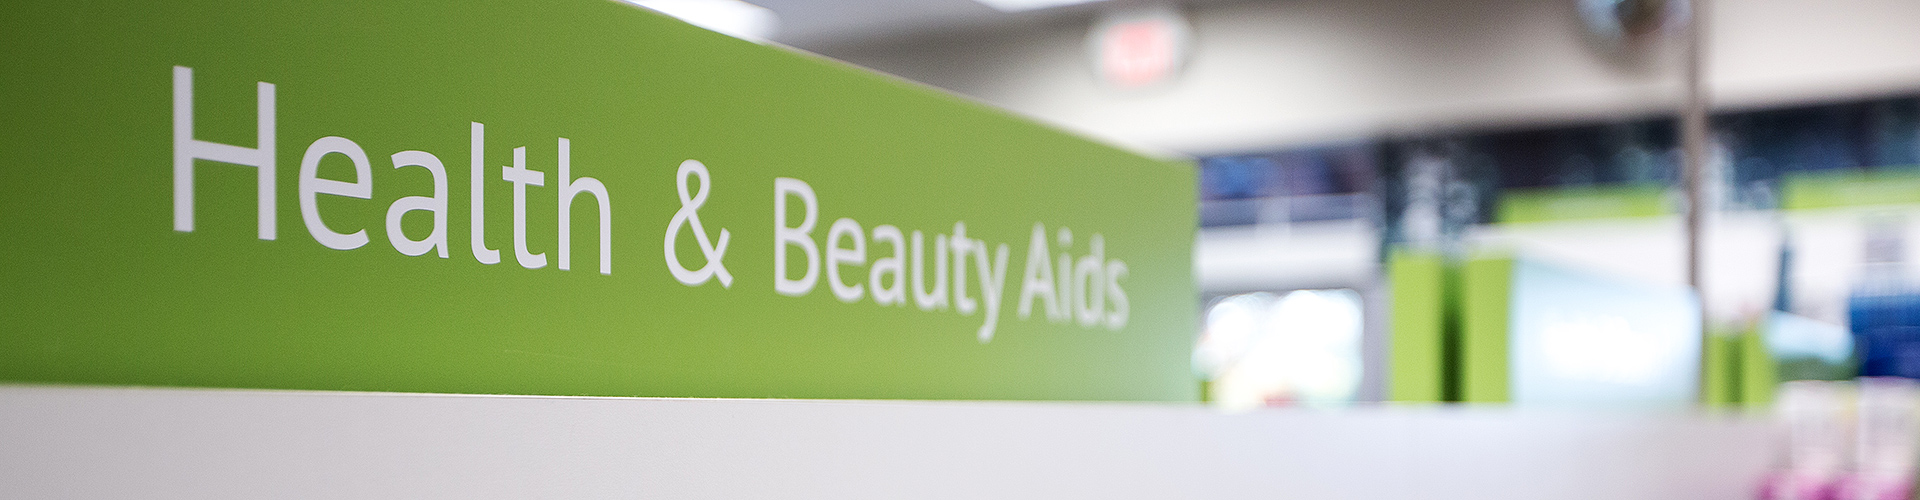 Health and beauty aids